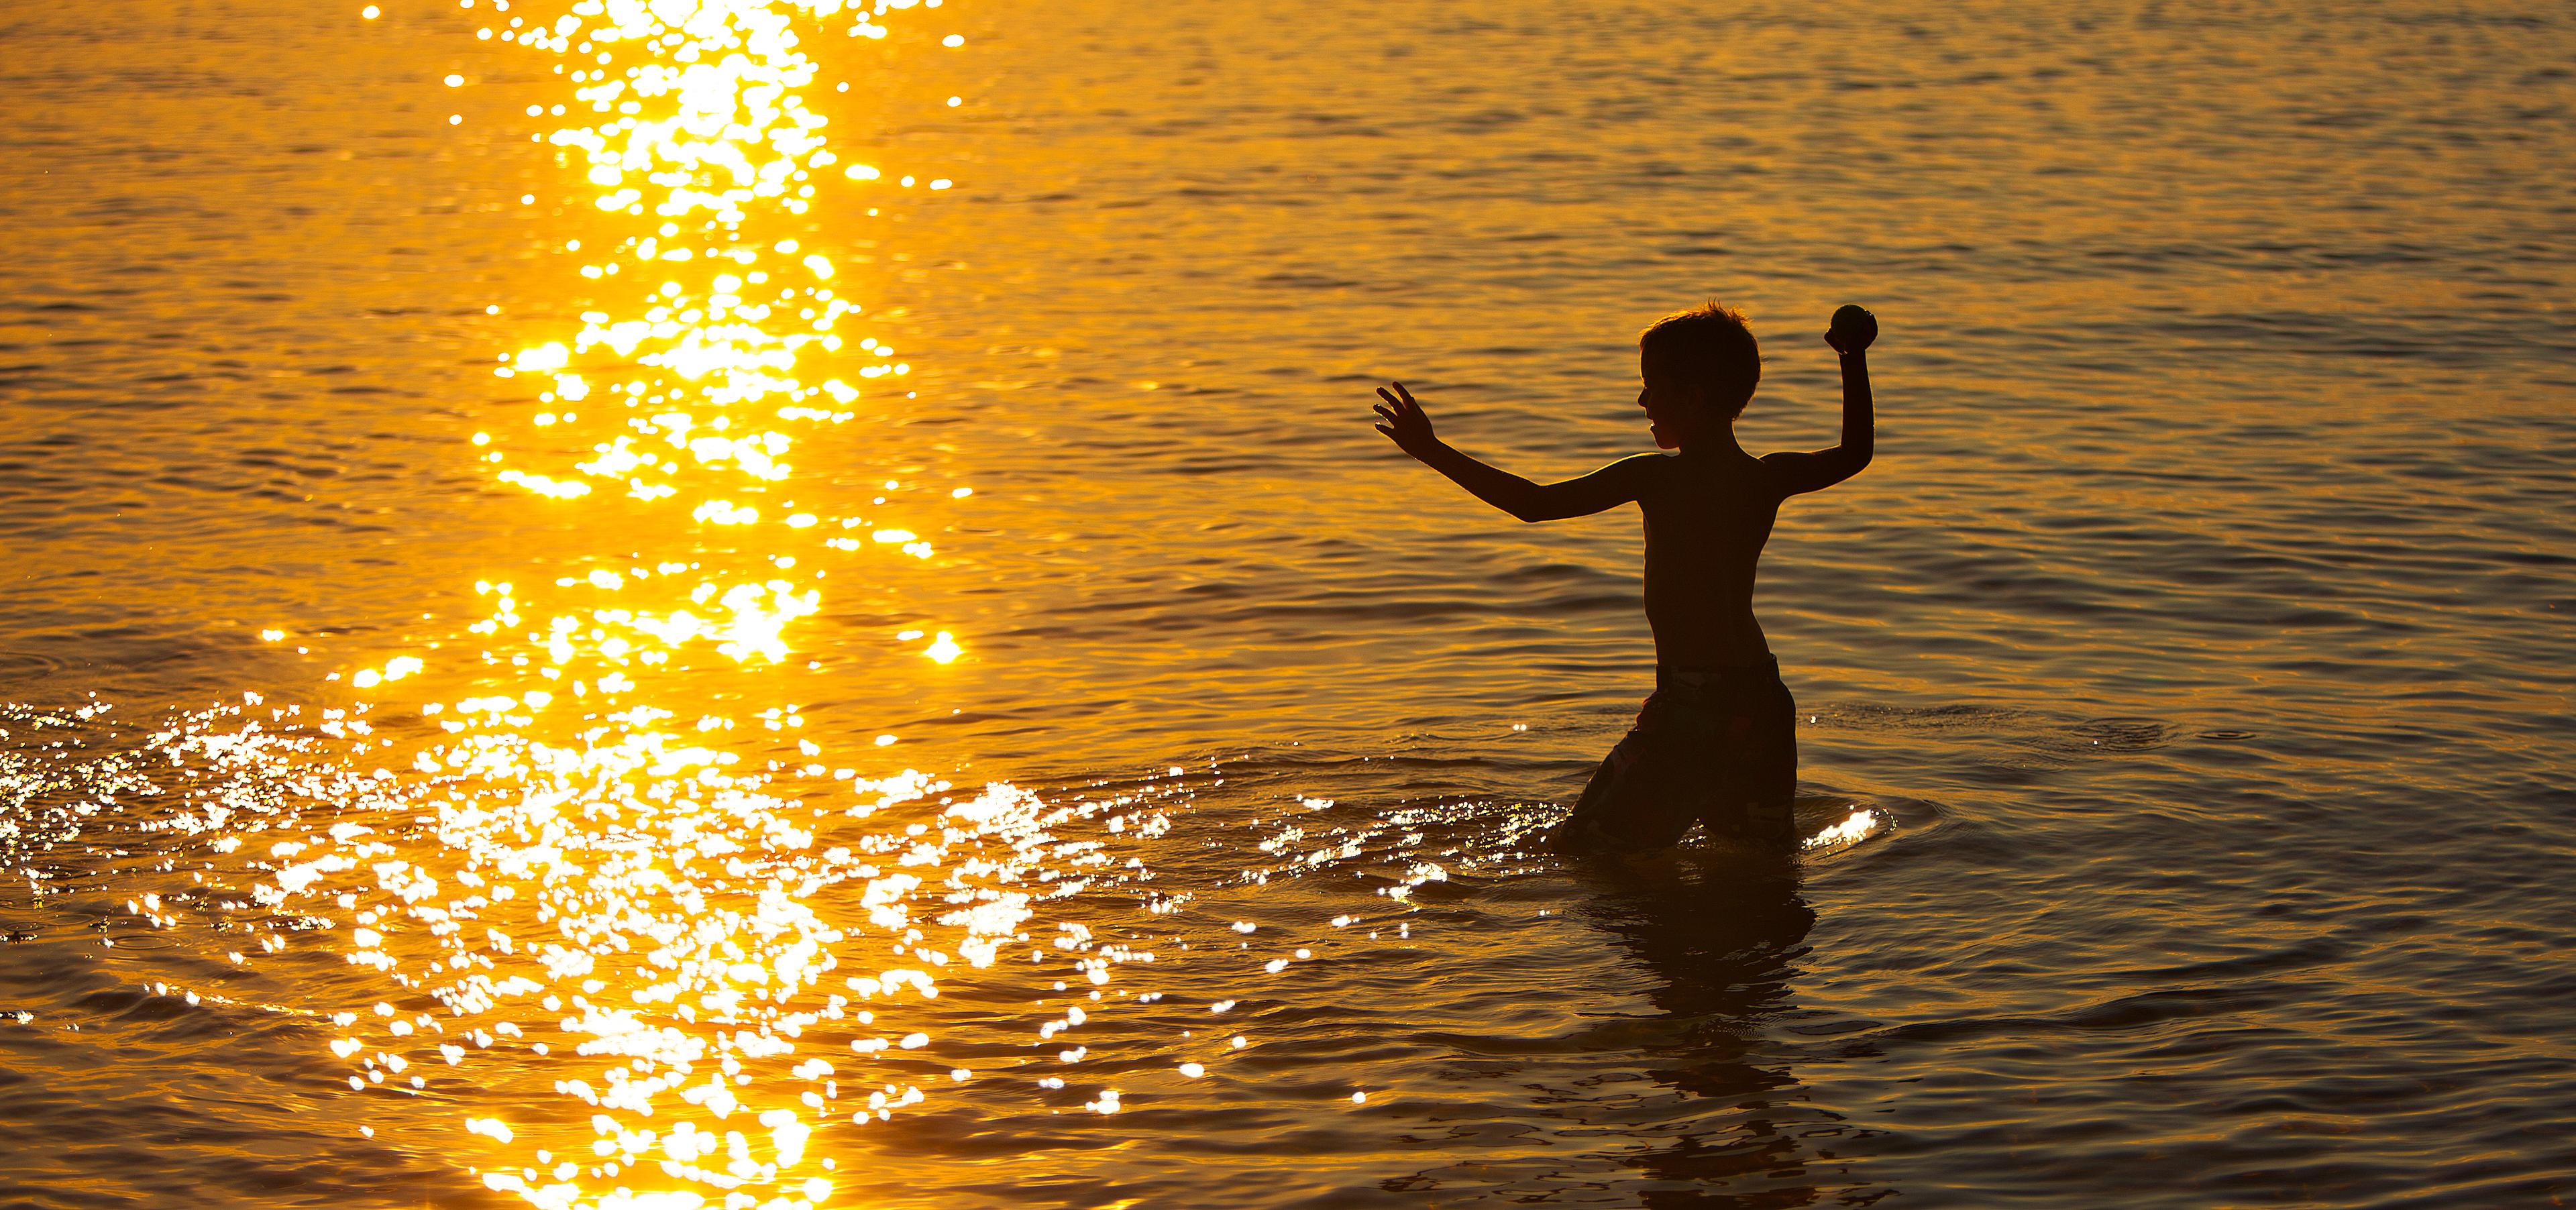 Ett barn leker i vattnet i solnedgången.